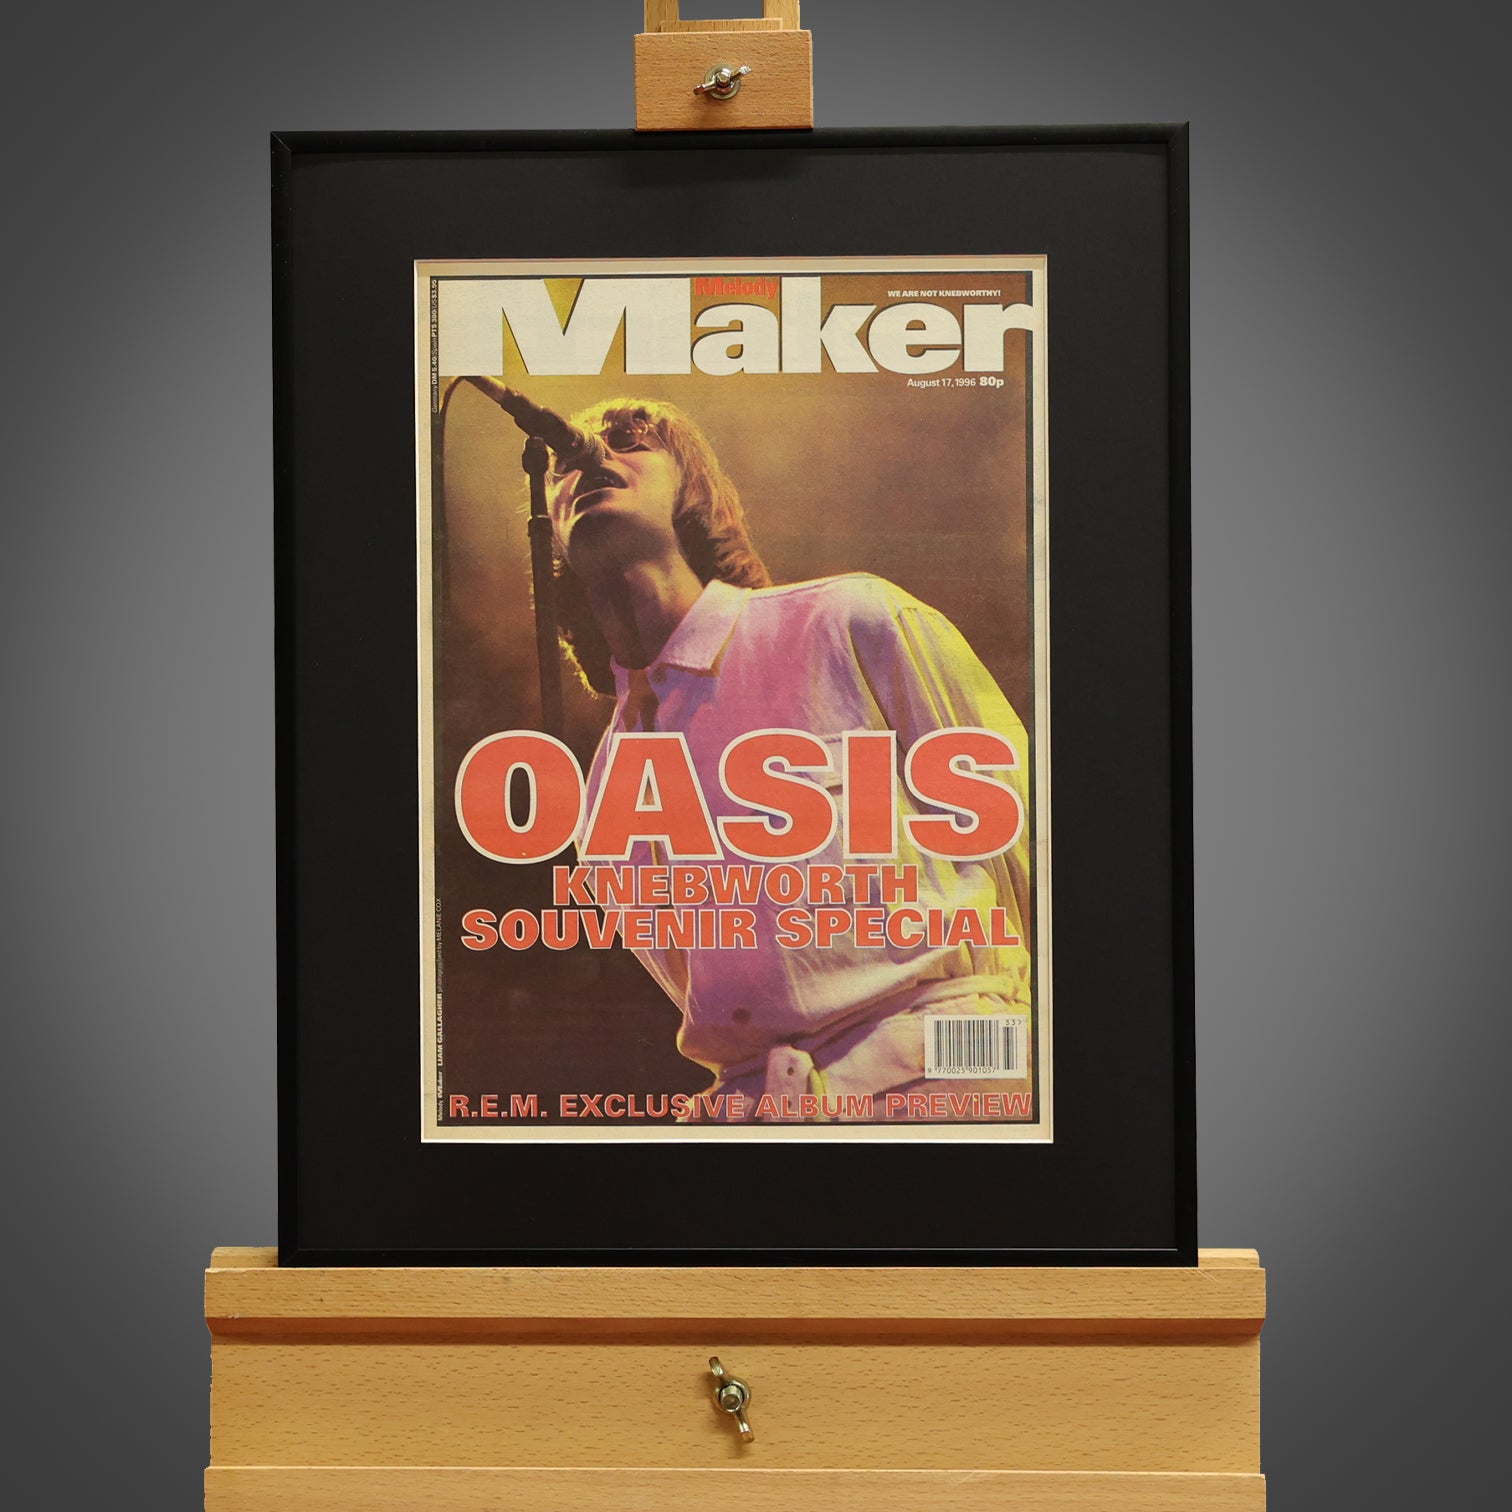 Melody Maker Original Cover Oasis 'Knebworth Special' 1996 - New Item